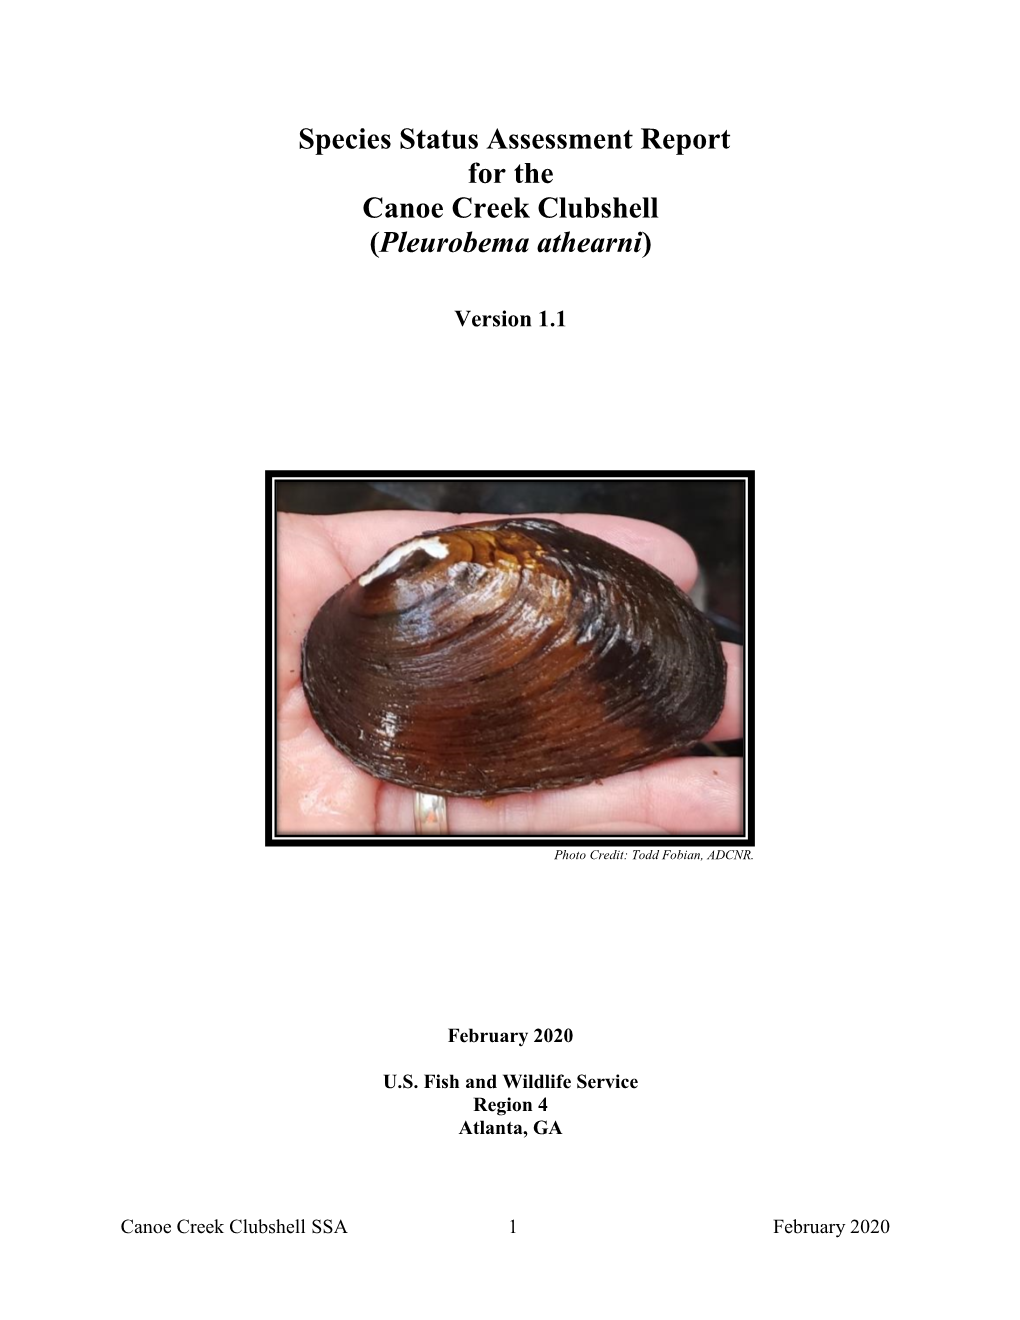 Species Status Assessment Report for the Canoe Creek Clubshell (Pleurobema Athearni)